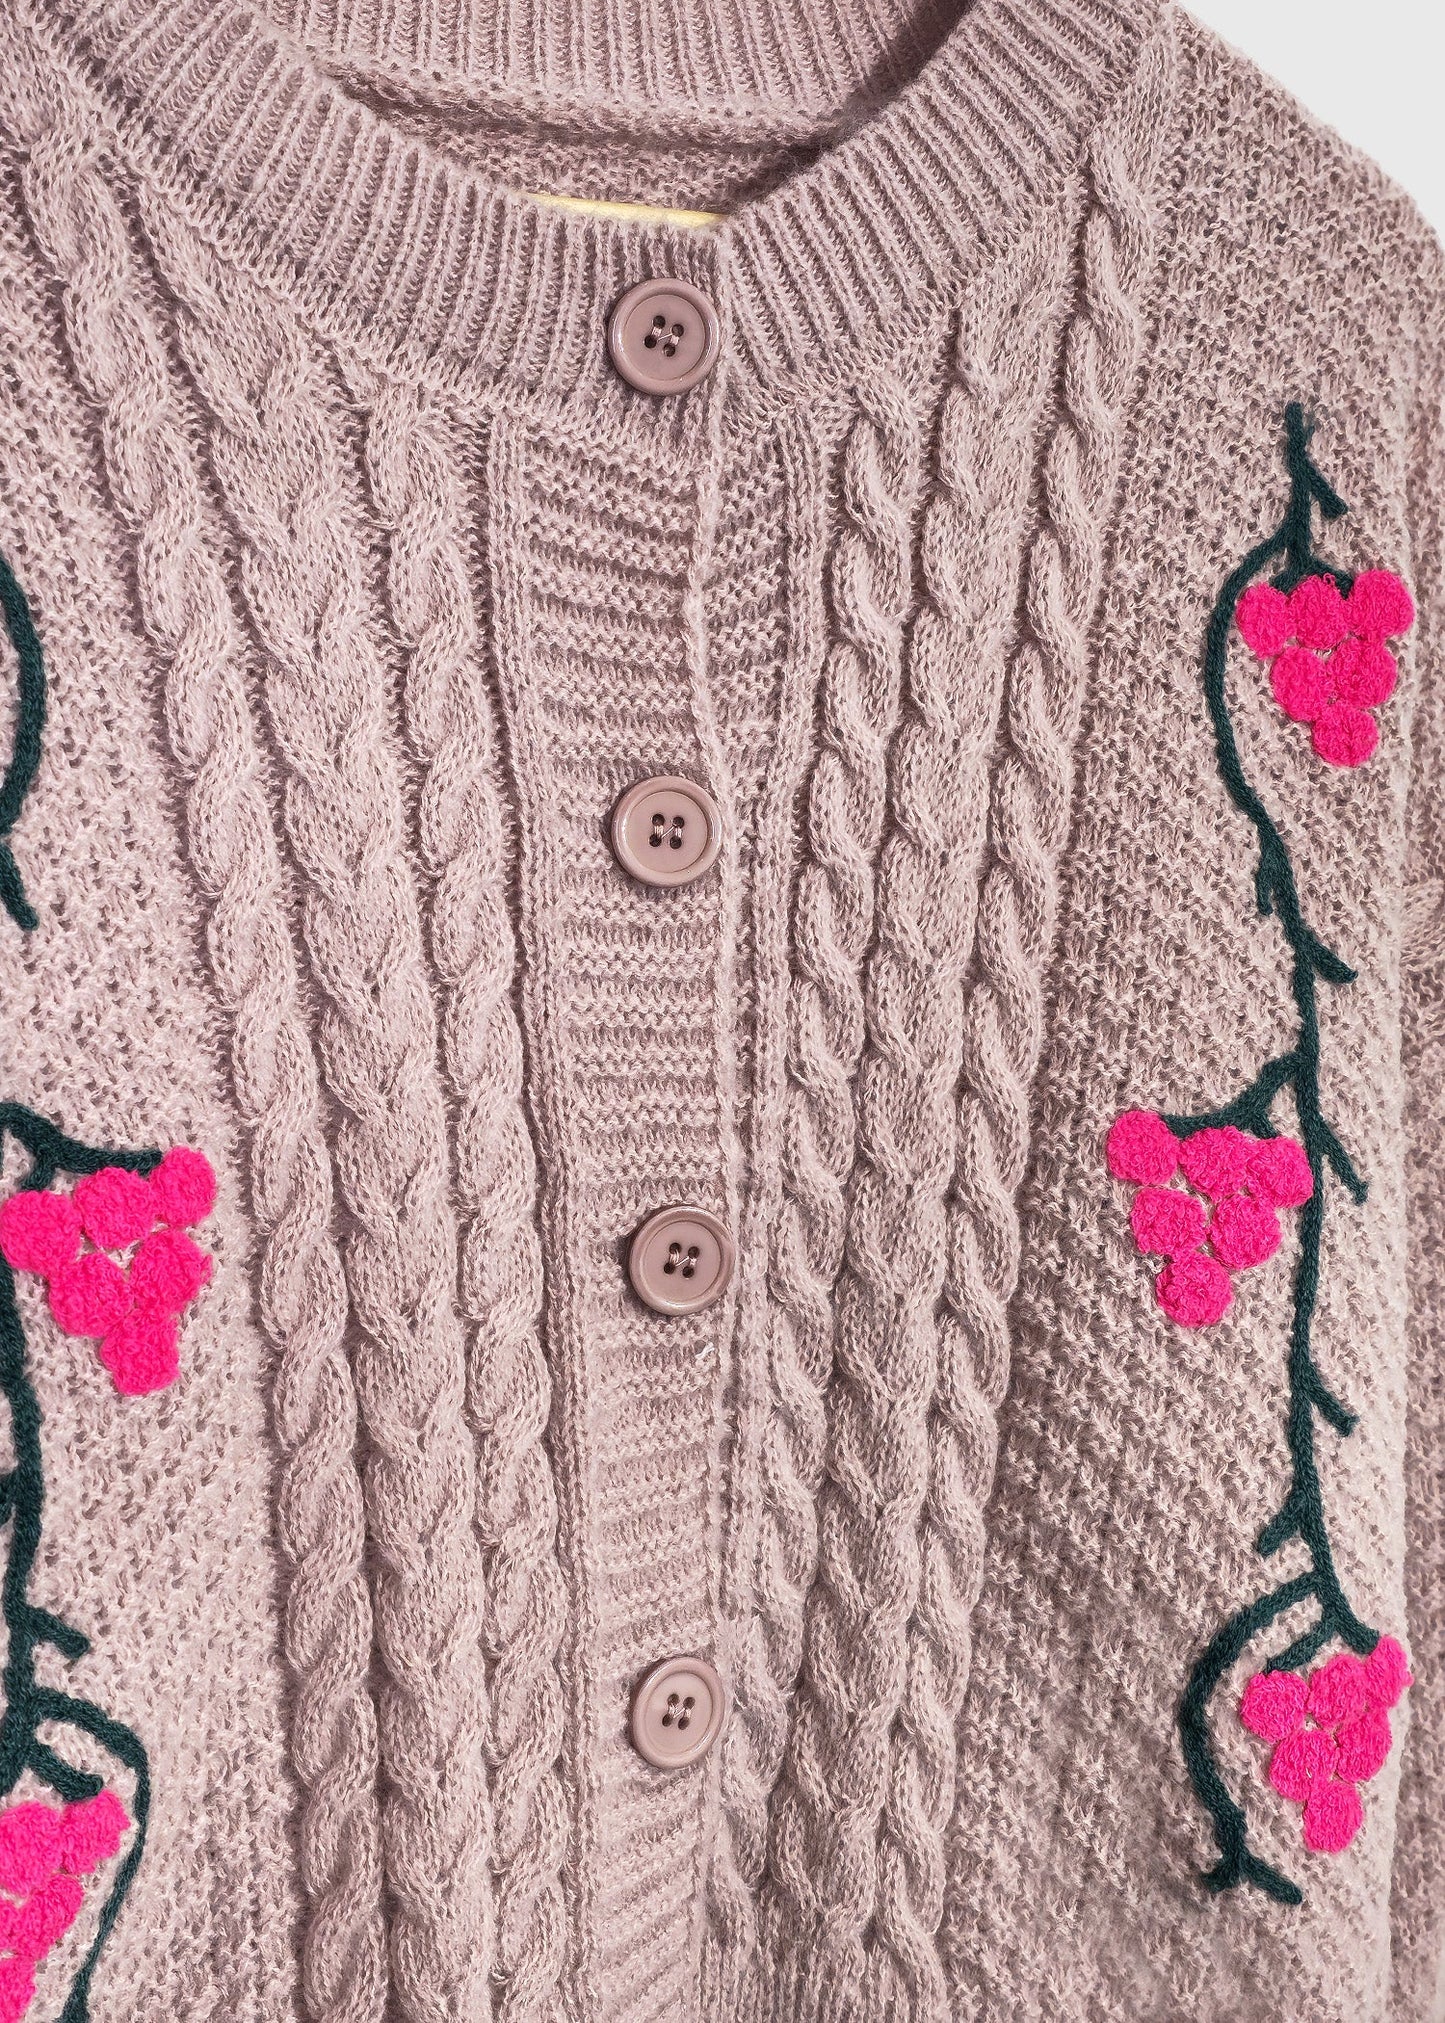 PINKBERRY Crochet Cardigan